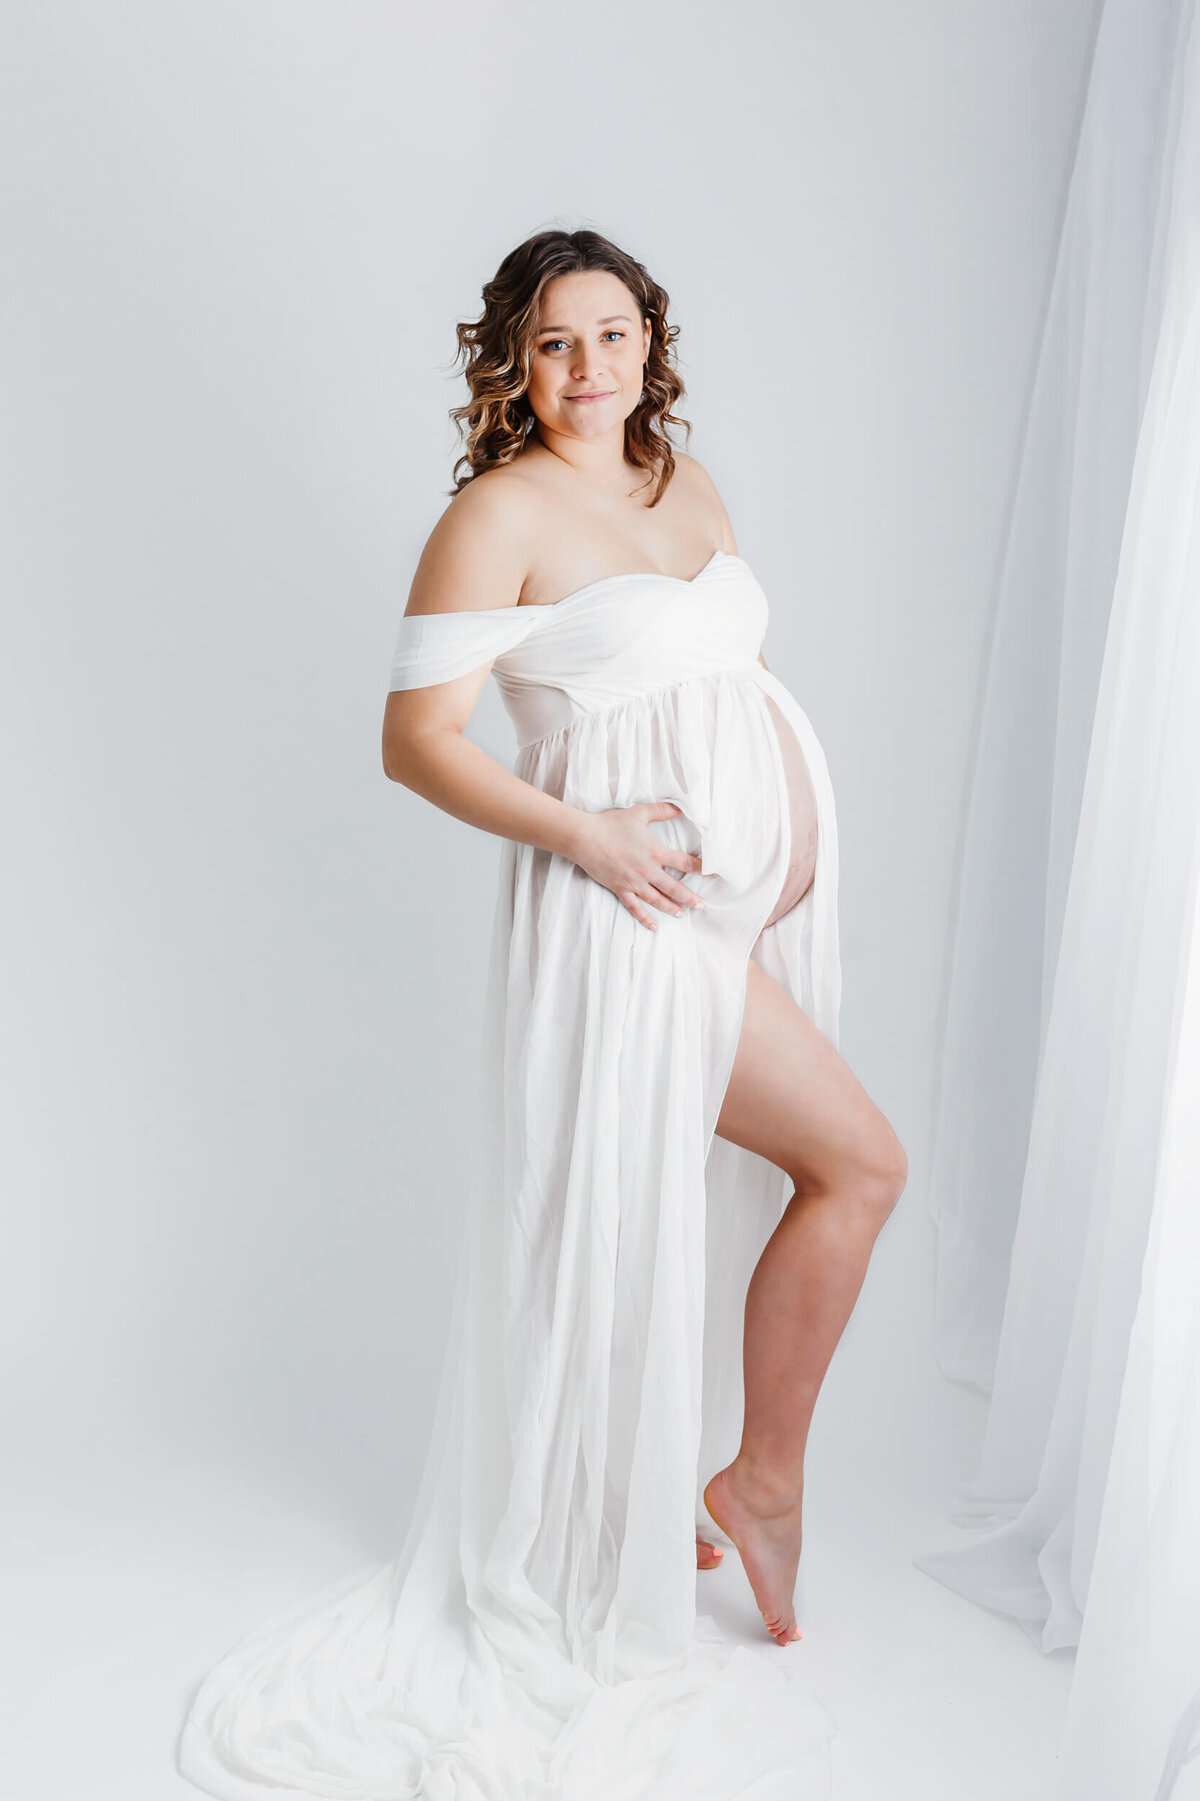 Guelph-Maternity-Photographer.jpg--10